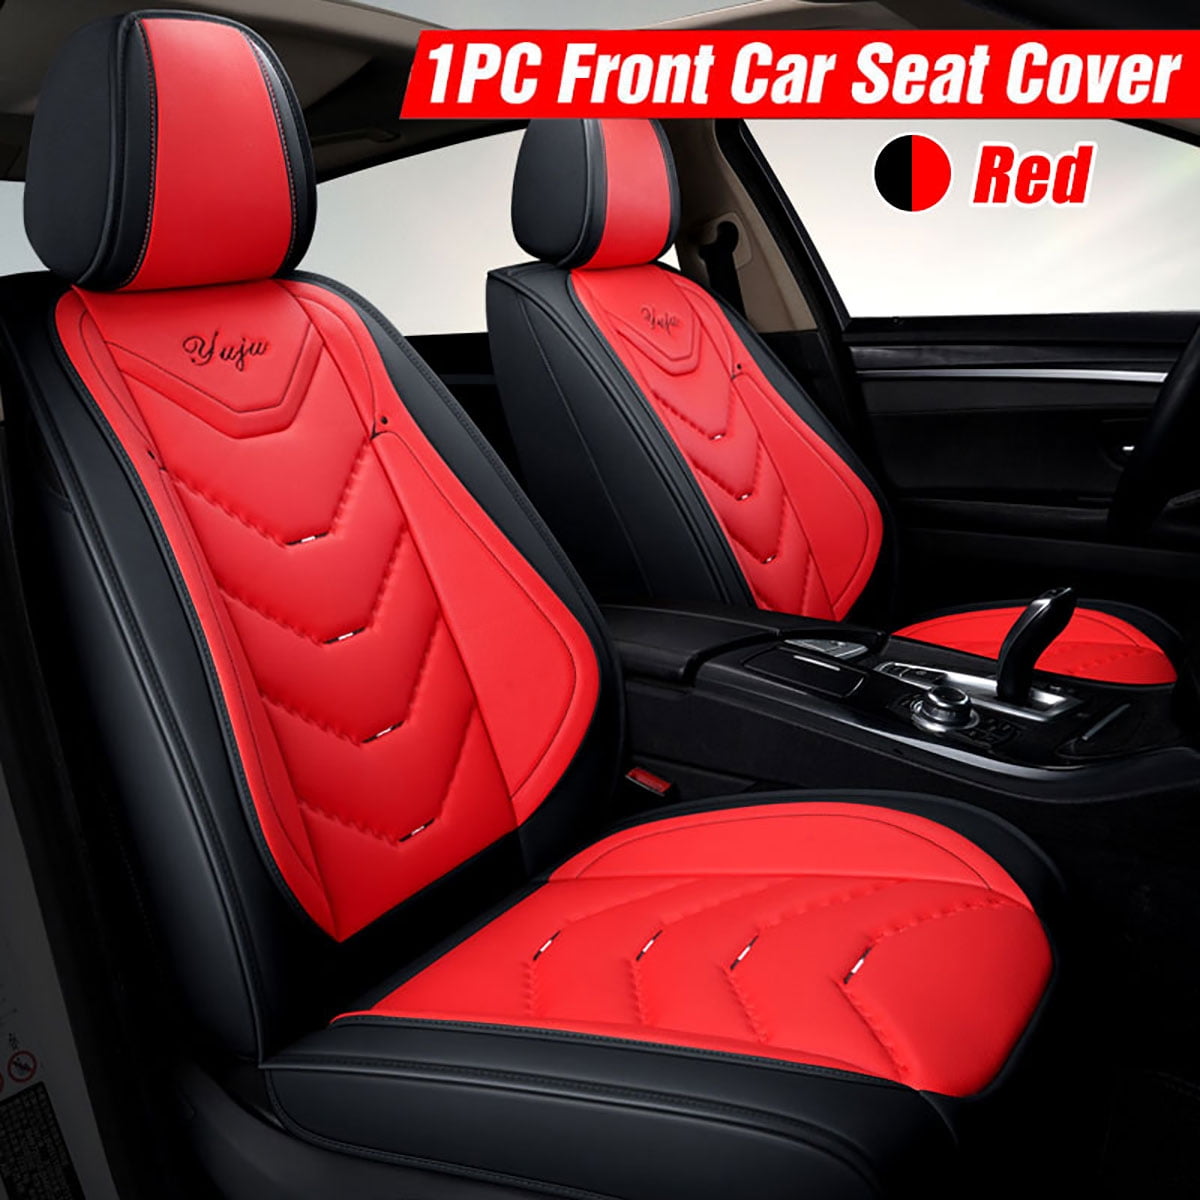 1PC Universal PU Leather Car Seat Covers, Automotive Vehicle Non-slip